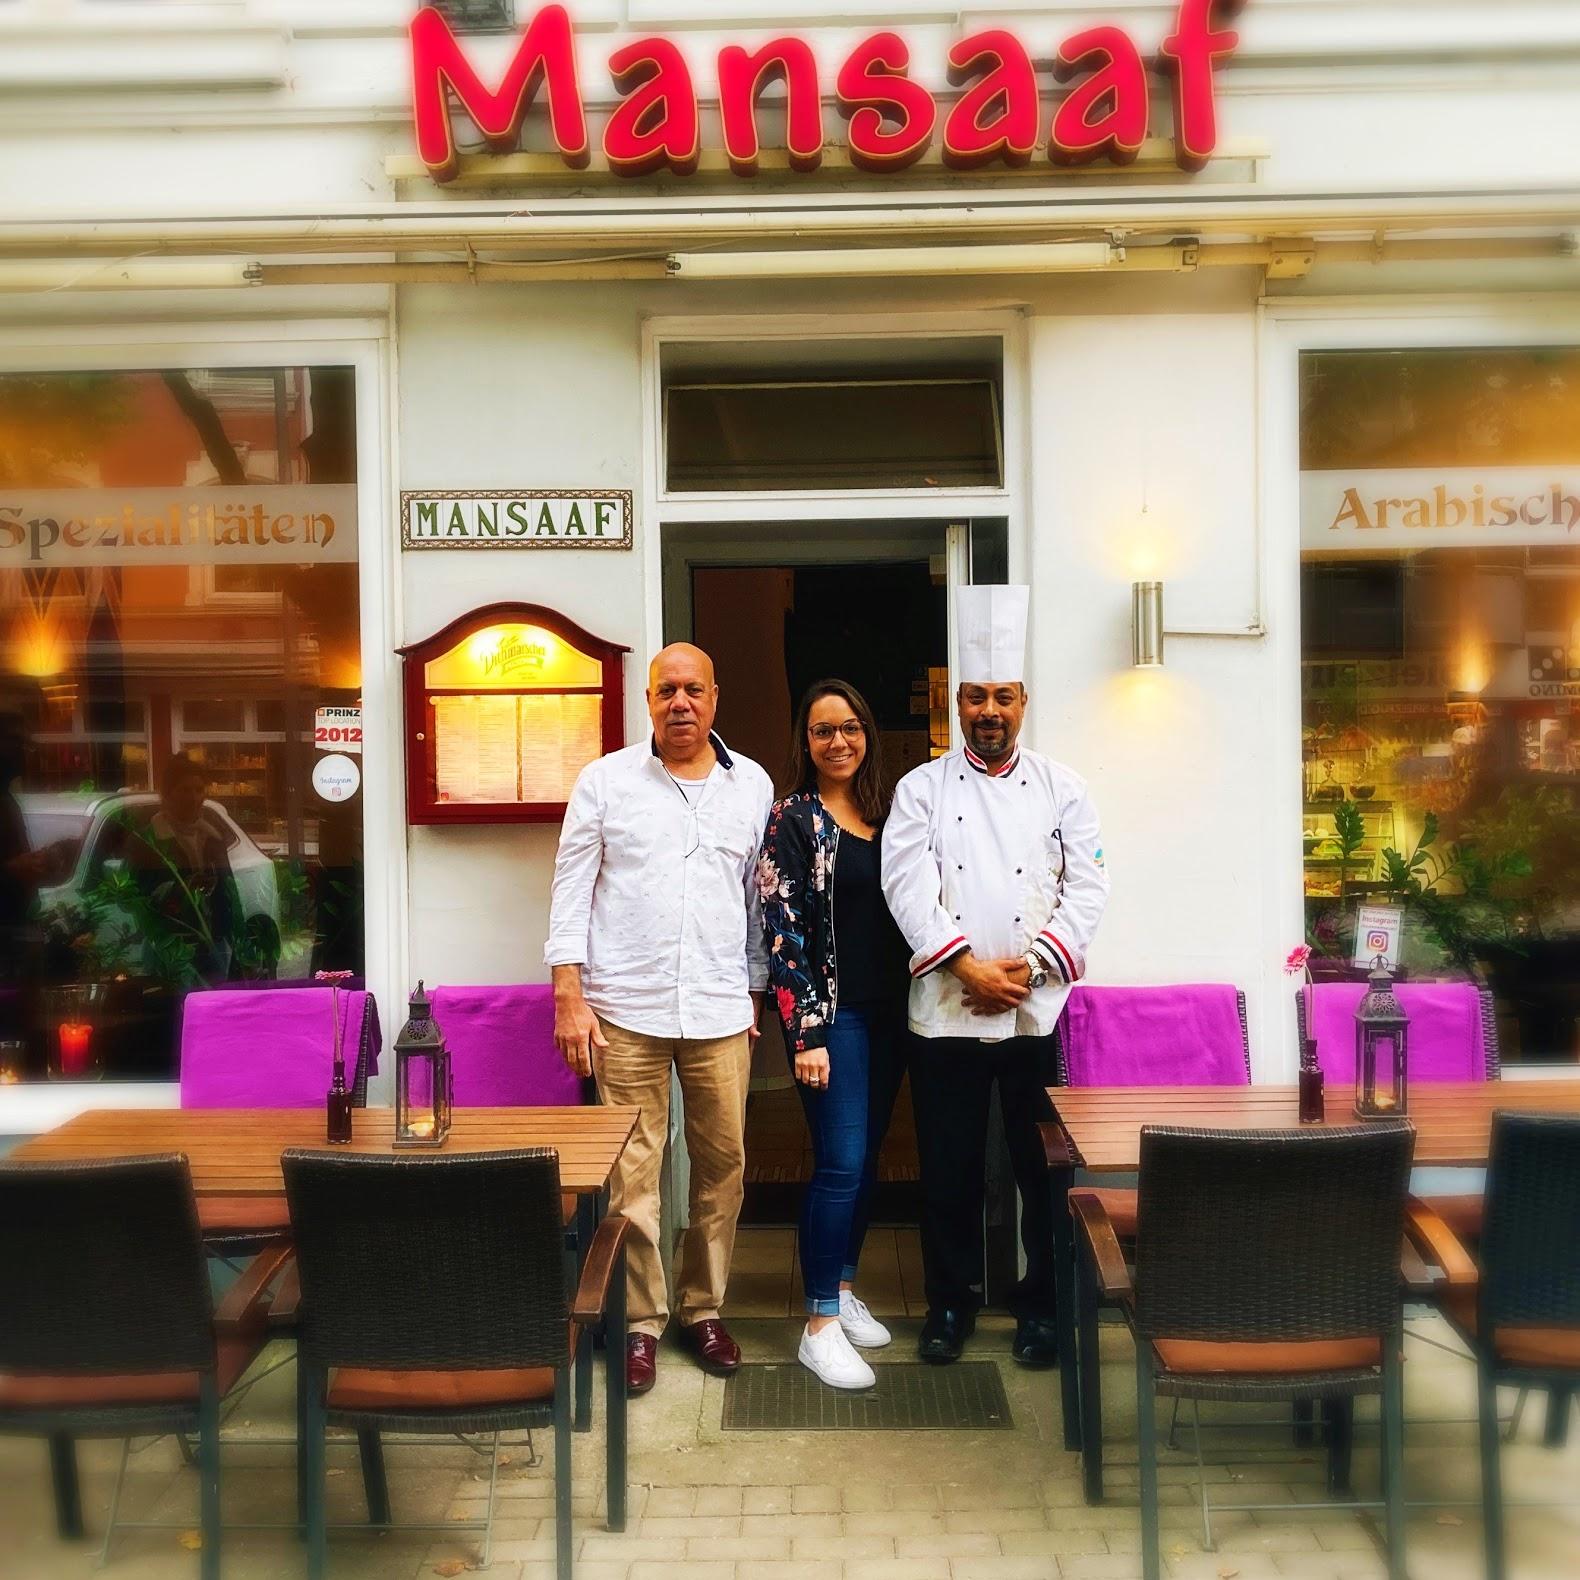 Restaurant "Mansaaf" in Hamburg